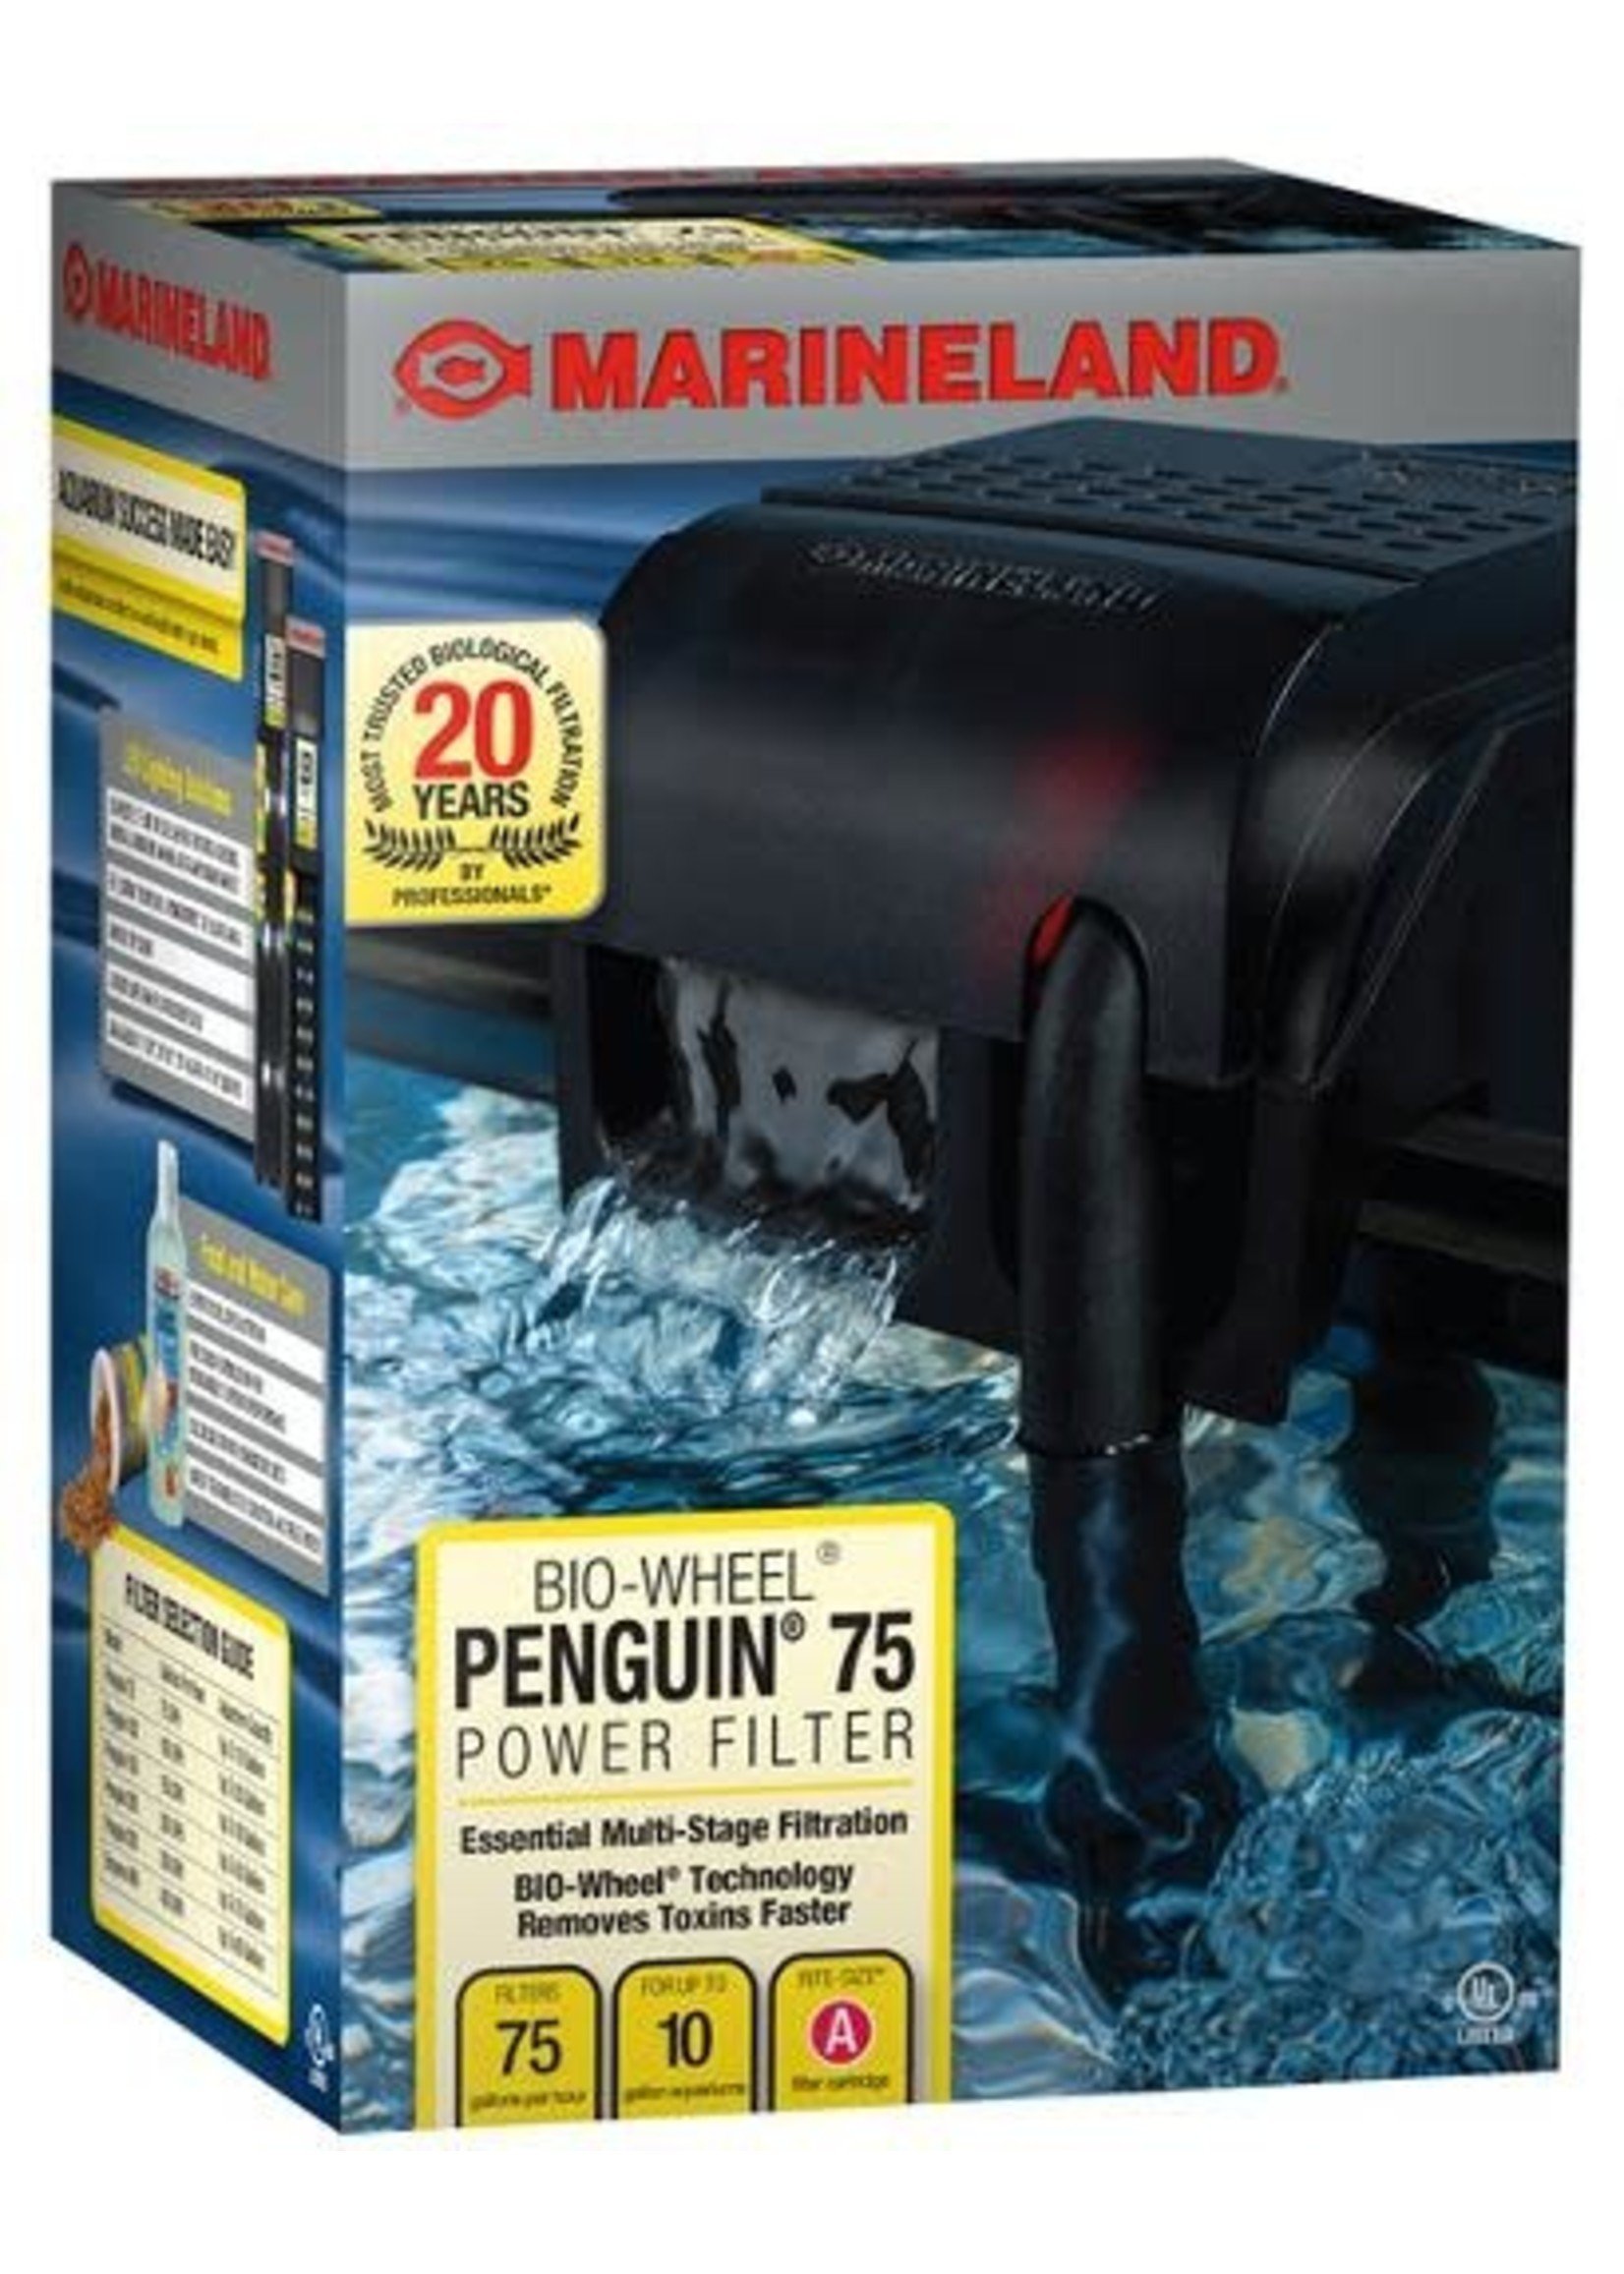 Marineland PENGUIN POWER FILTER 75